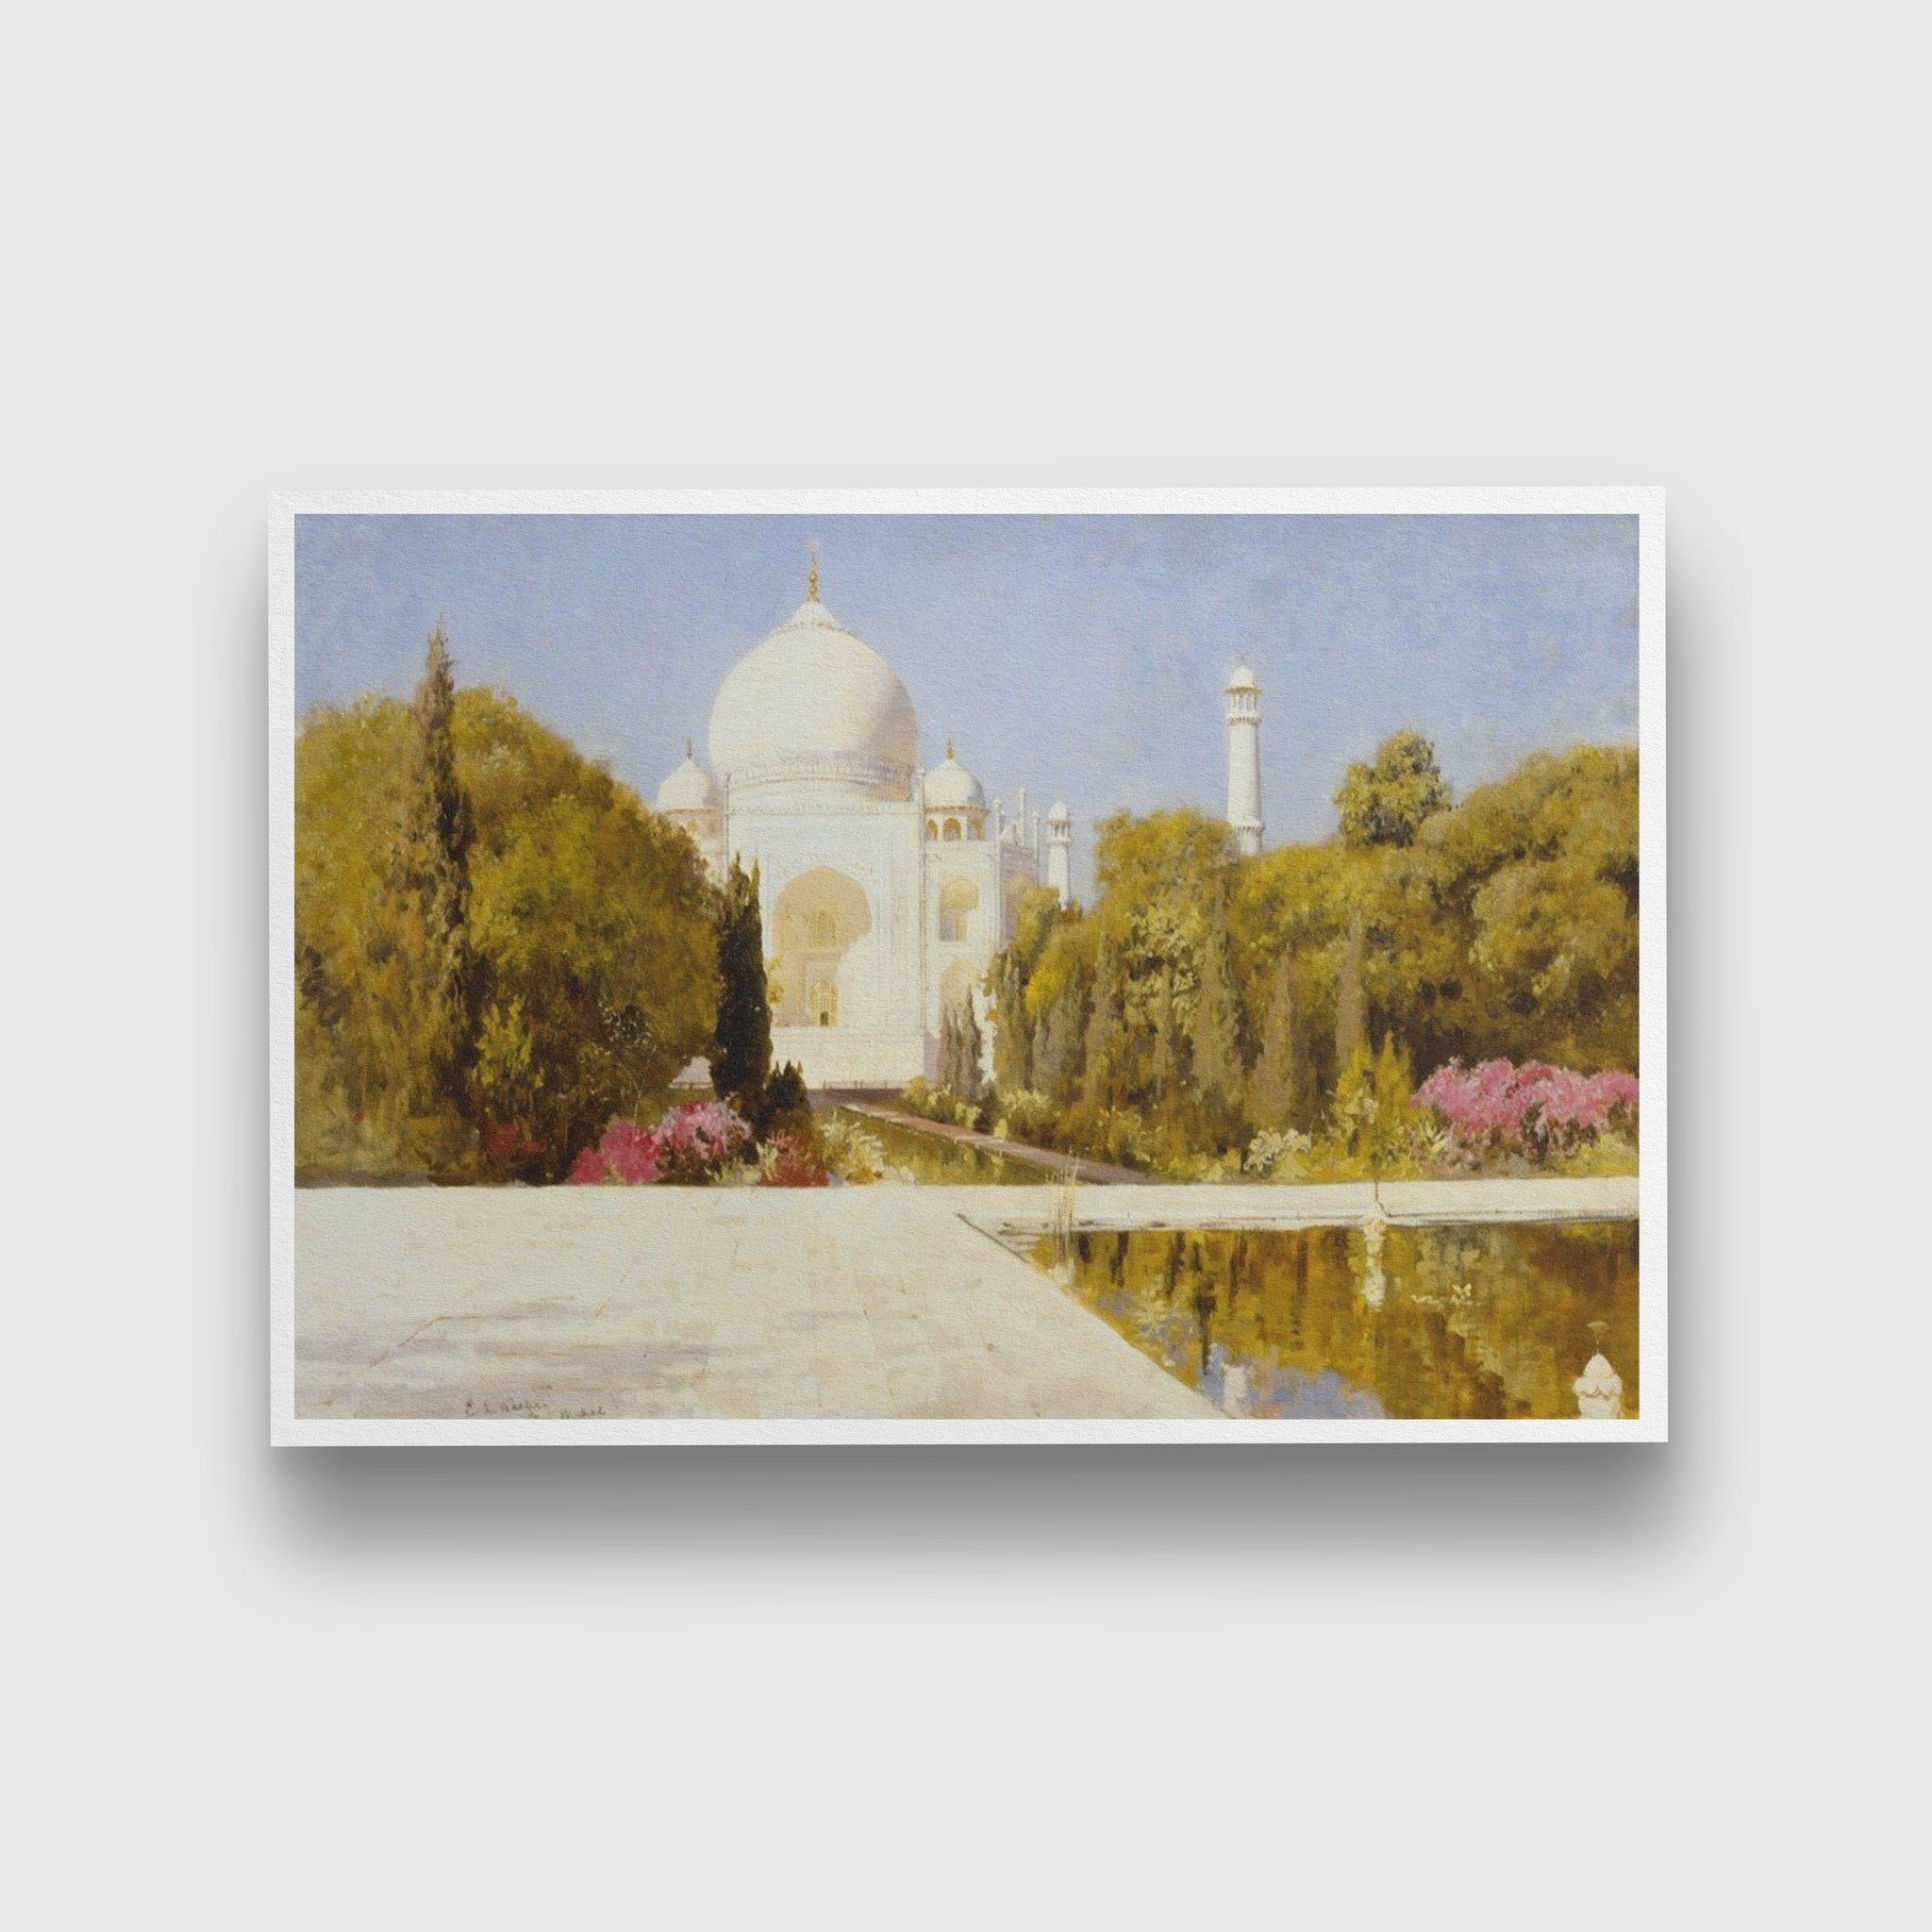 The Taj Mahal Painting - Meri Deewar - MeriDeewar